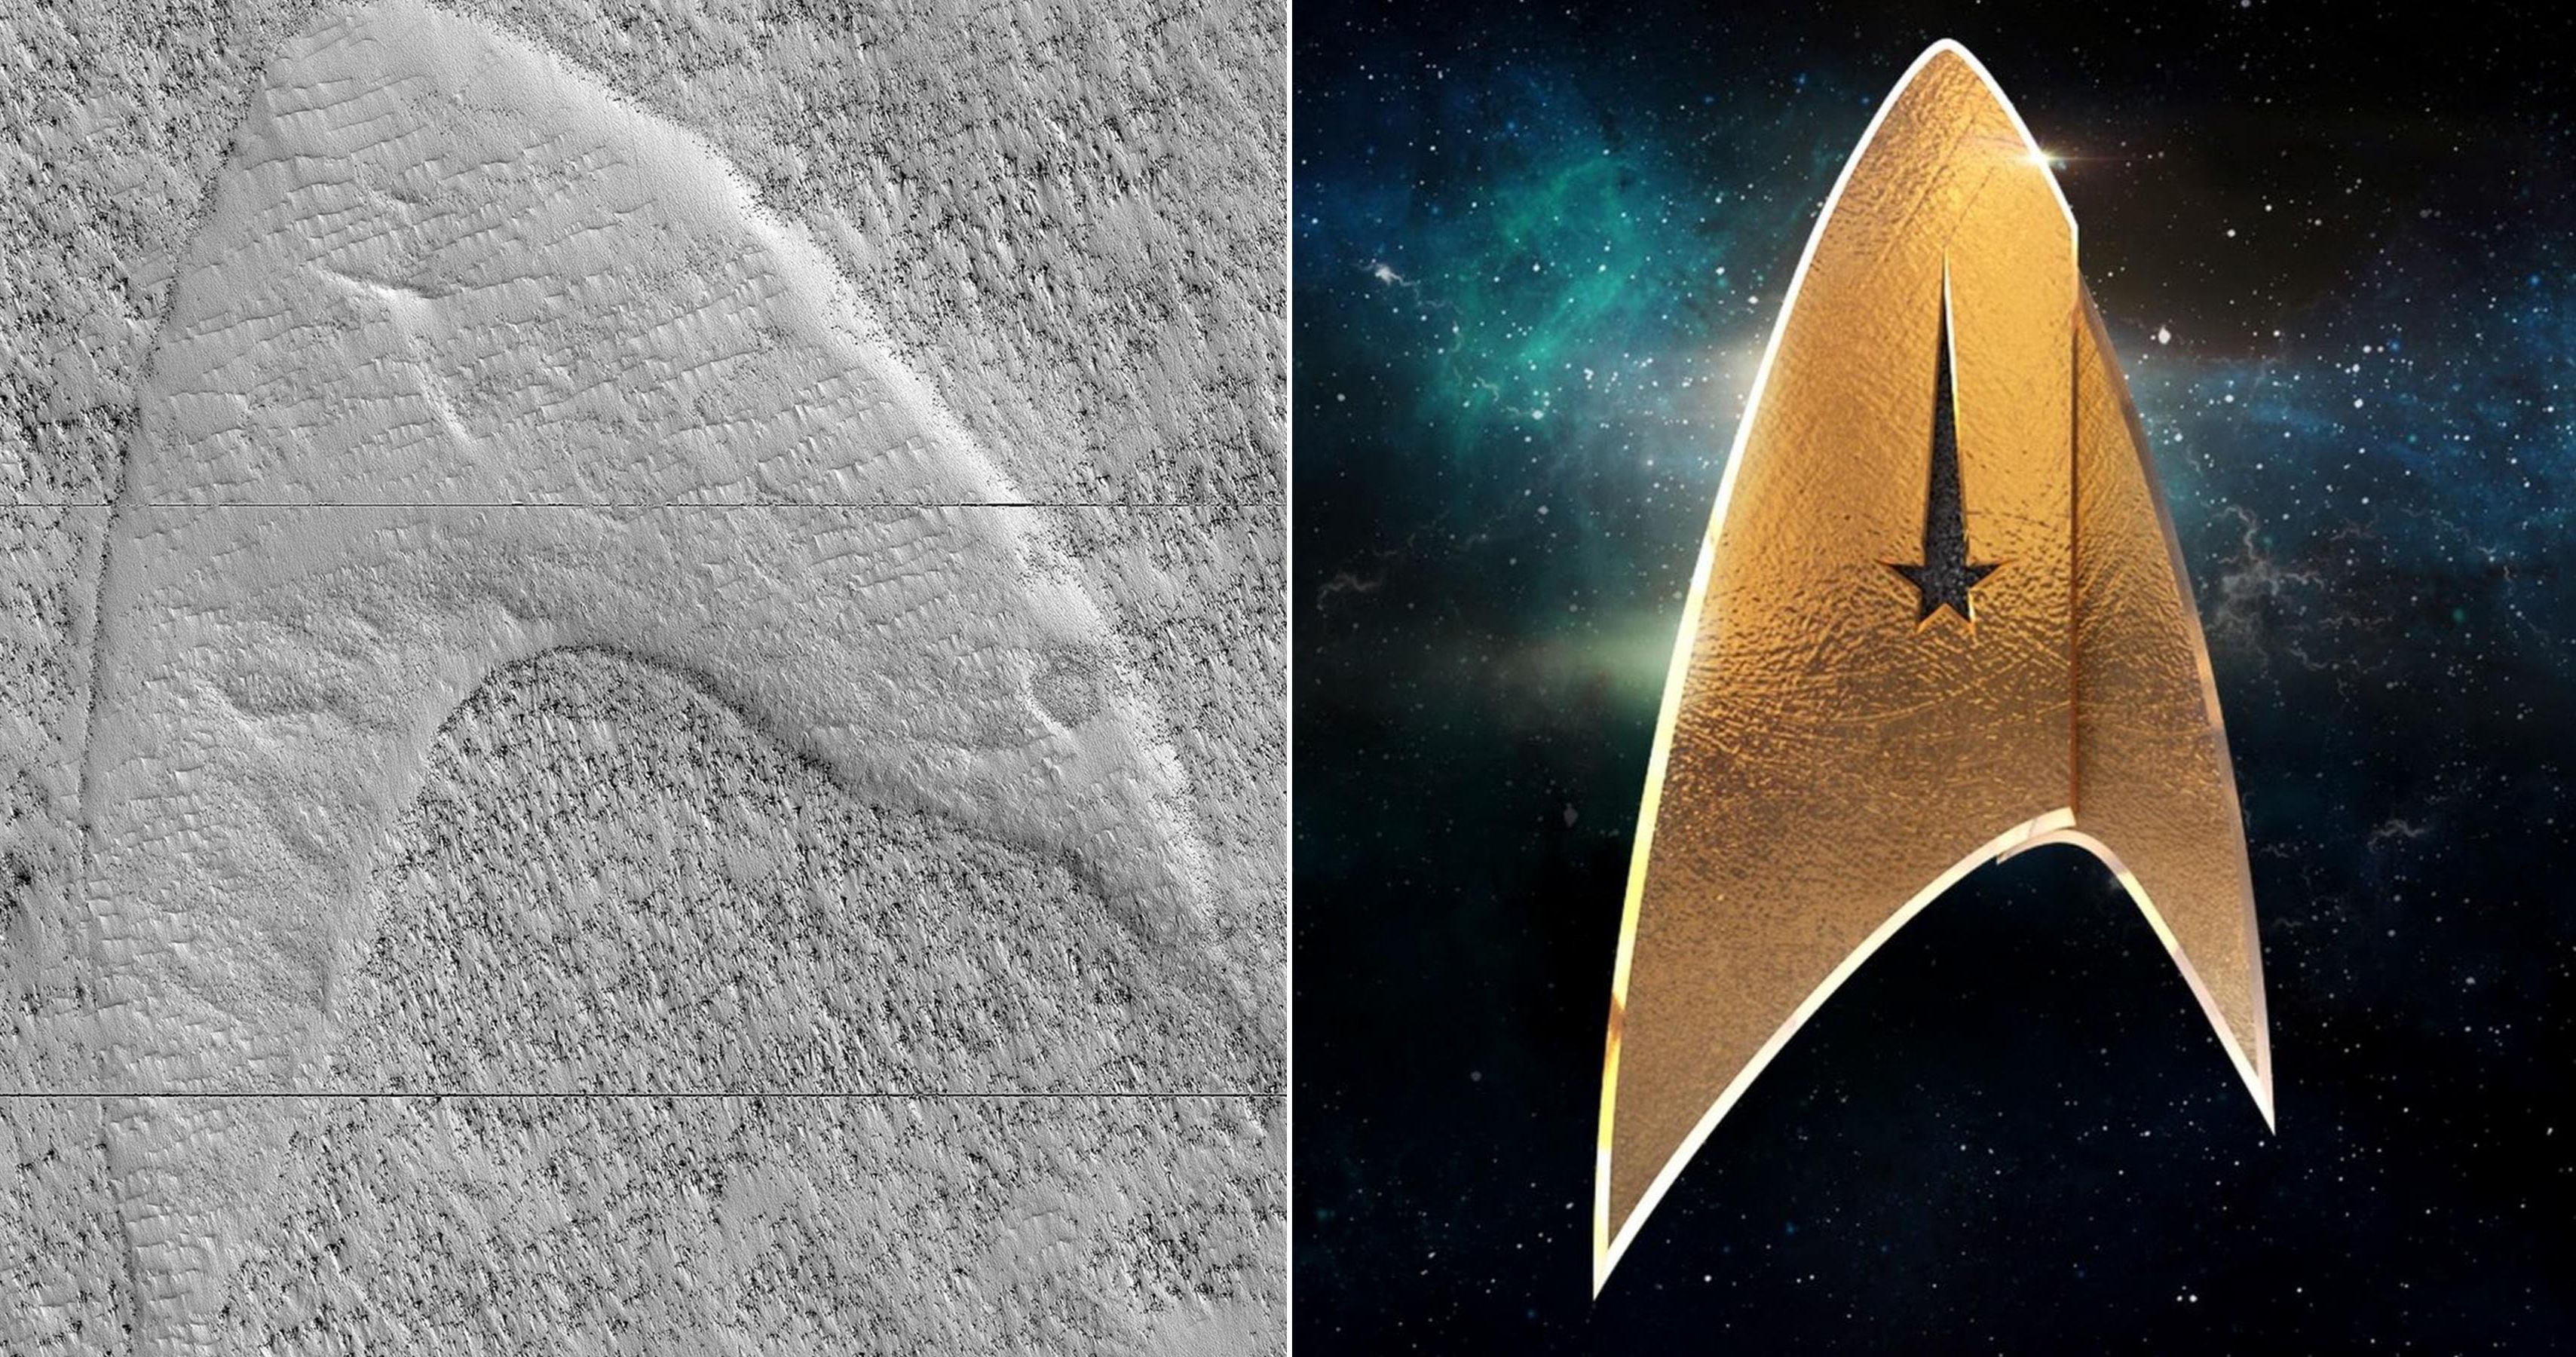 Star Trek Insignia Appears on Mars